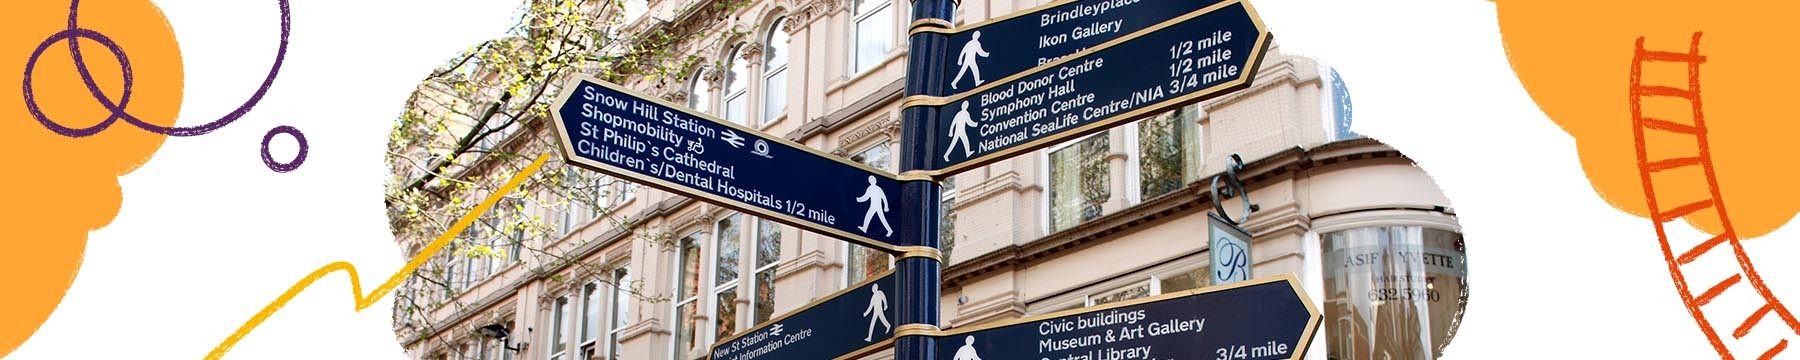 Birmingham city centre signpost